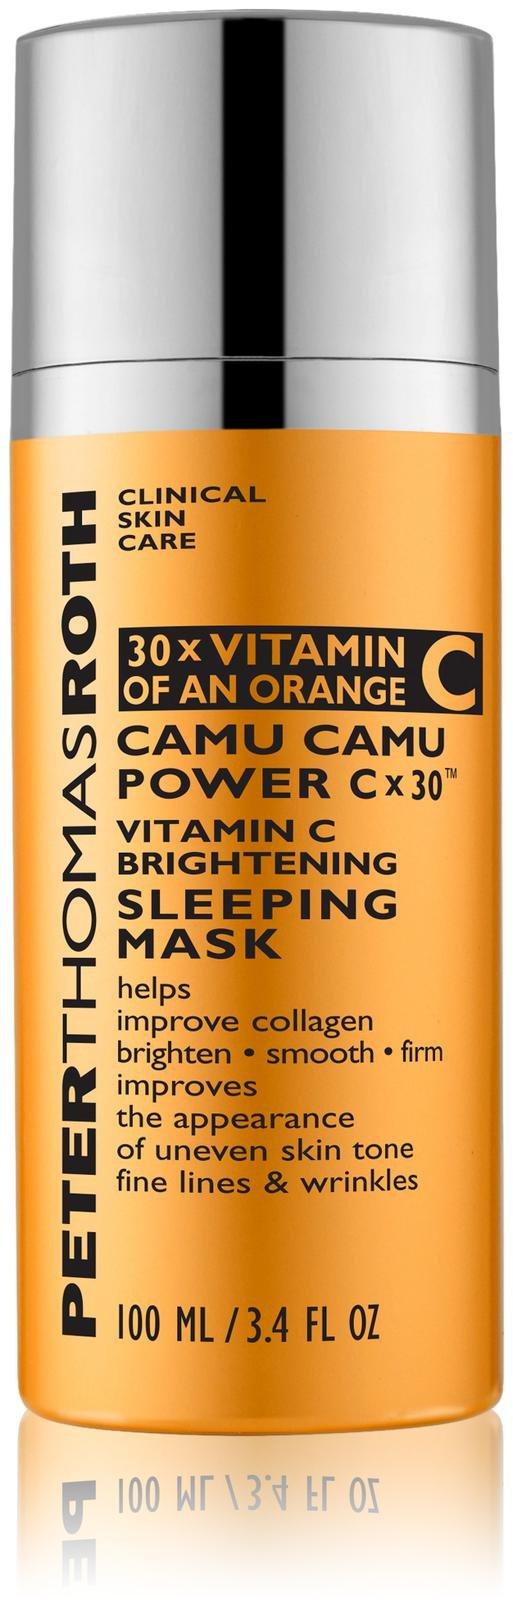 Peter Thomas Roth Camu Camu Power C X 30 Vitamin C Brightening Sleeping Mask - 3.4 Fl Oz